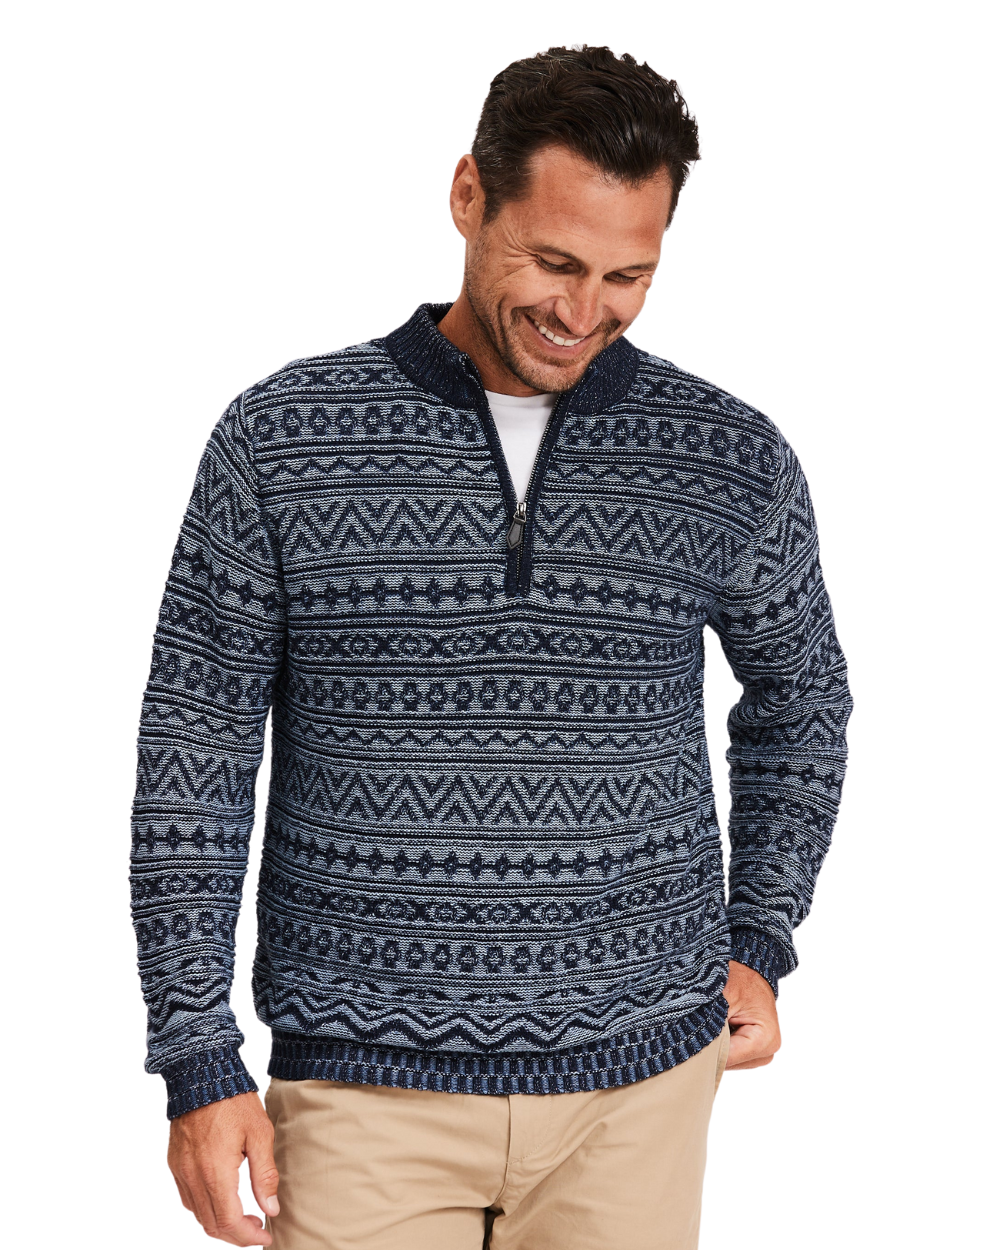 Cotton 1/4 Zip Pattern Sweater